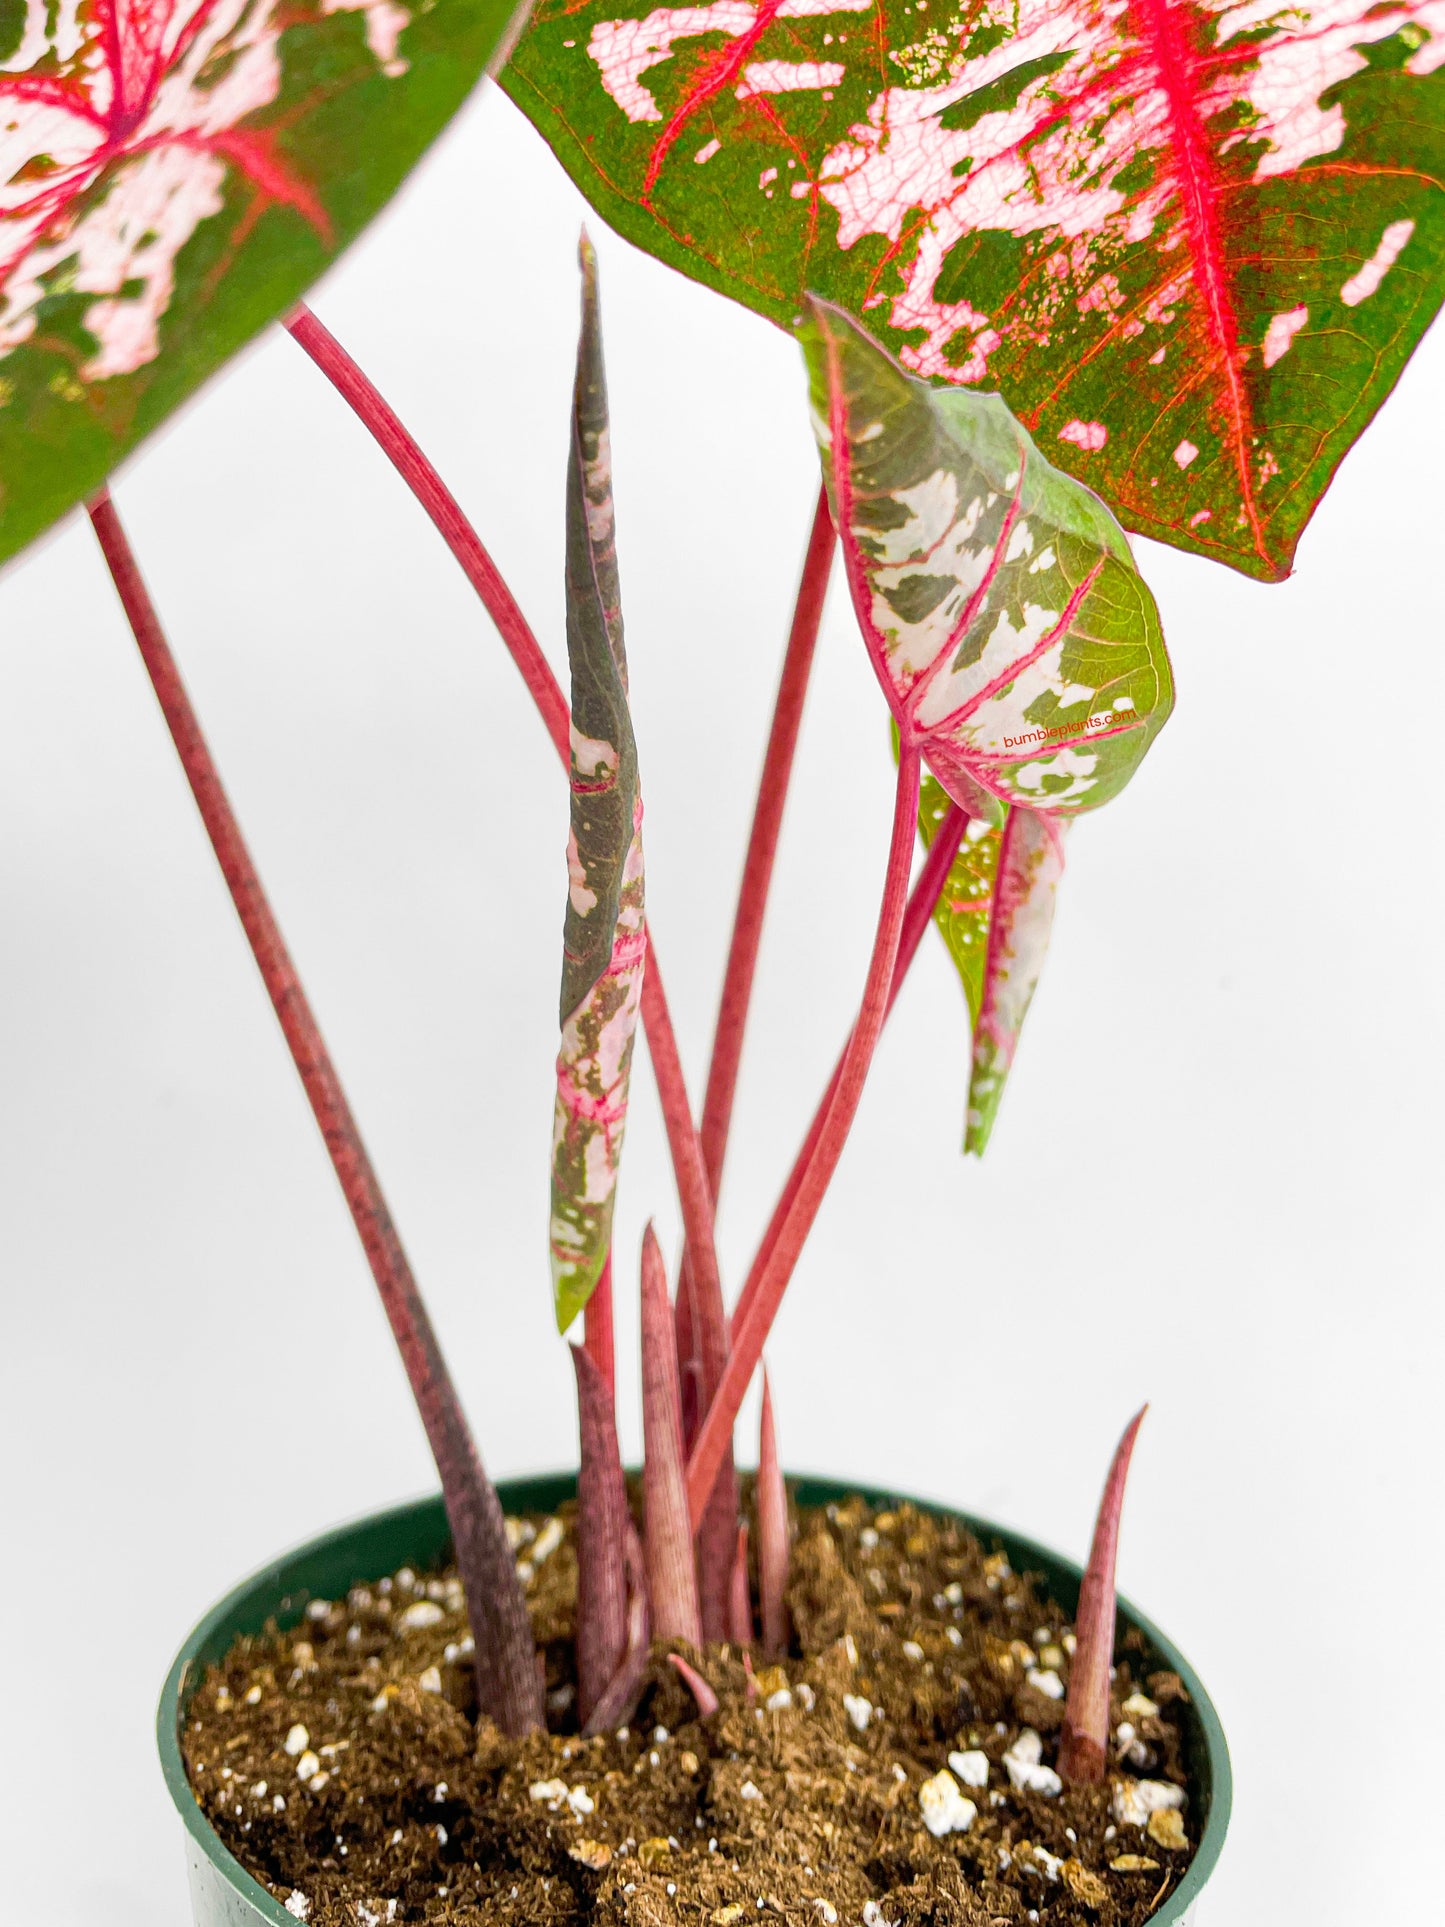 Caladium Carolyn Whorton by Bumble Plants